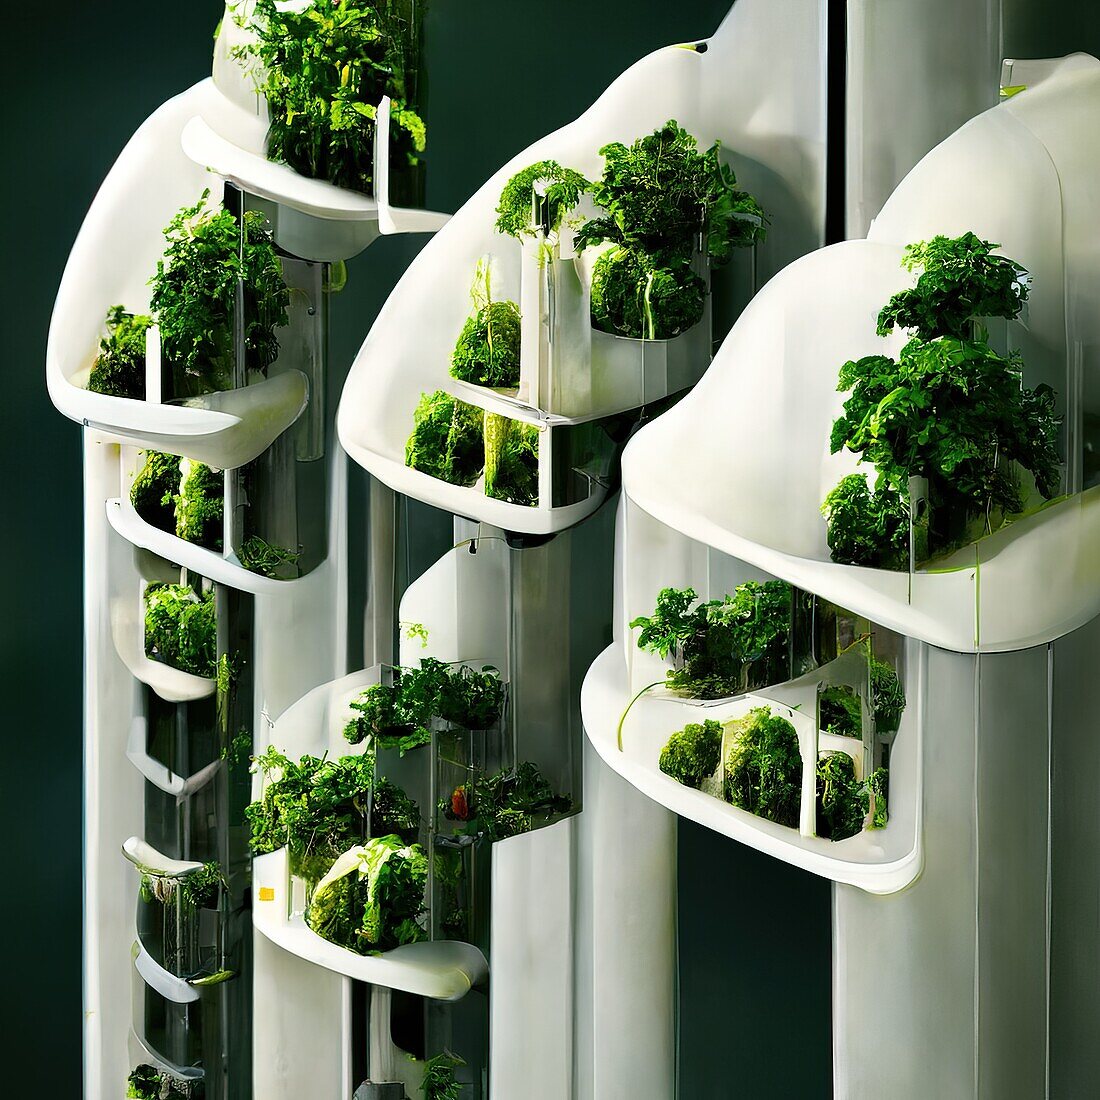 Vertical farming, conceptual illustration